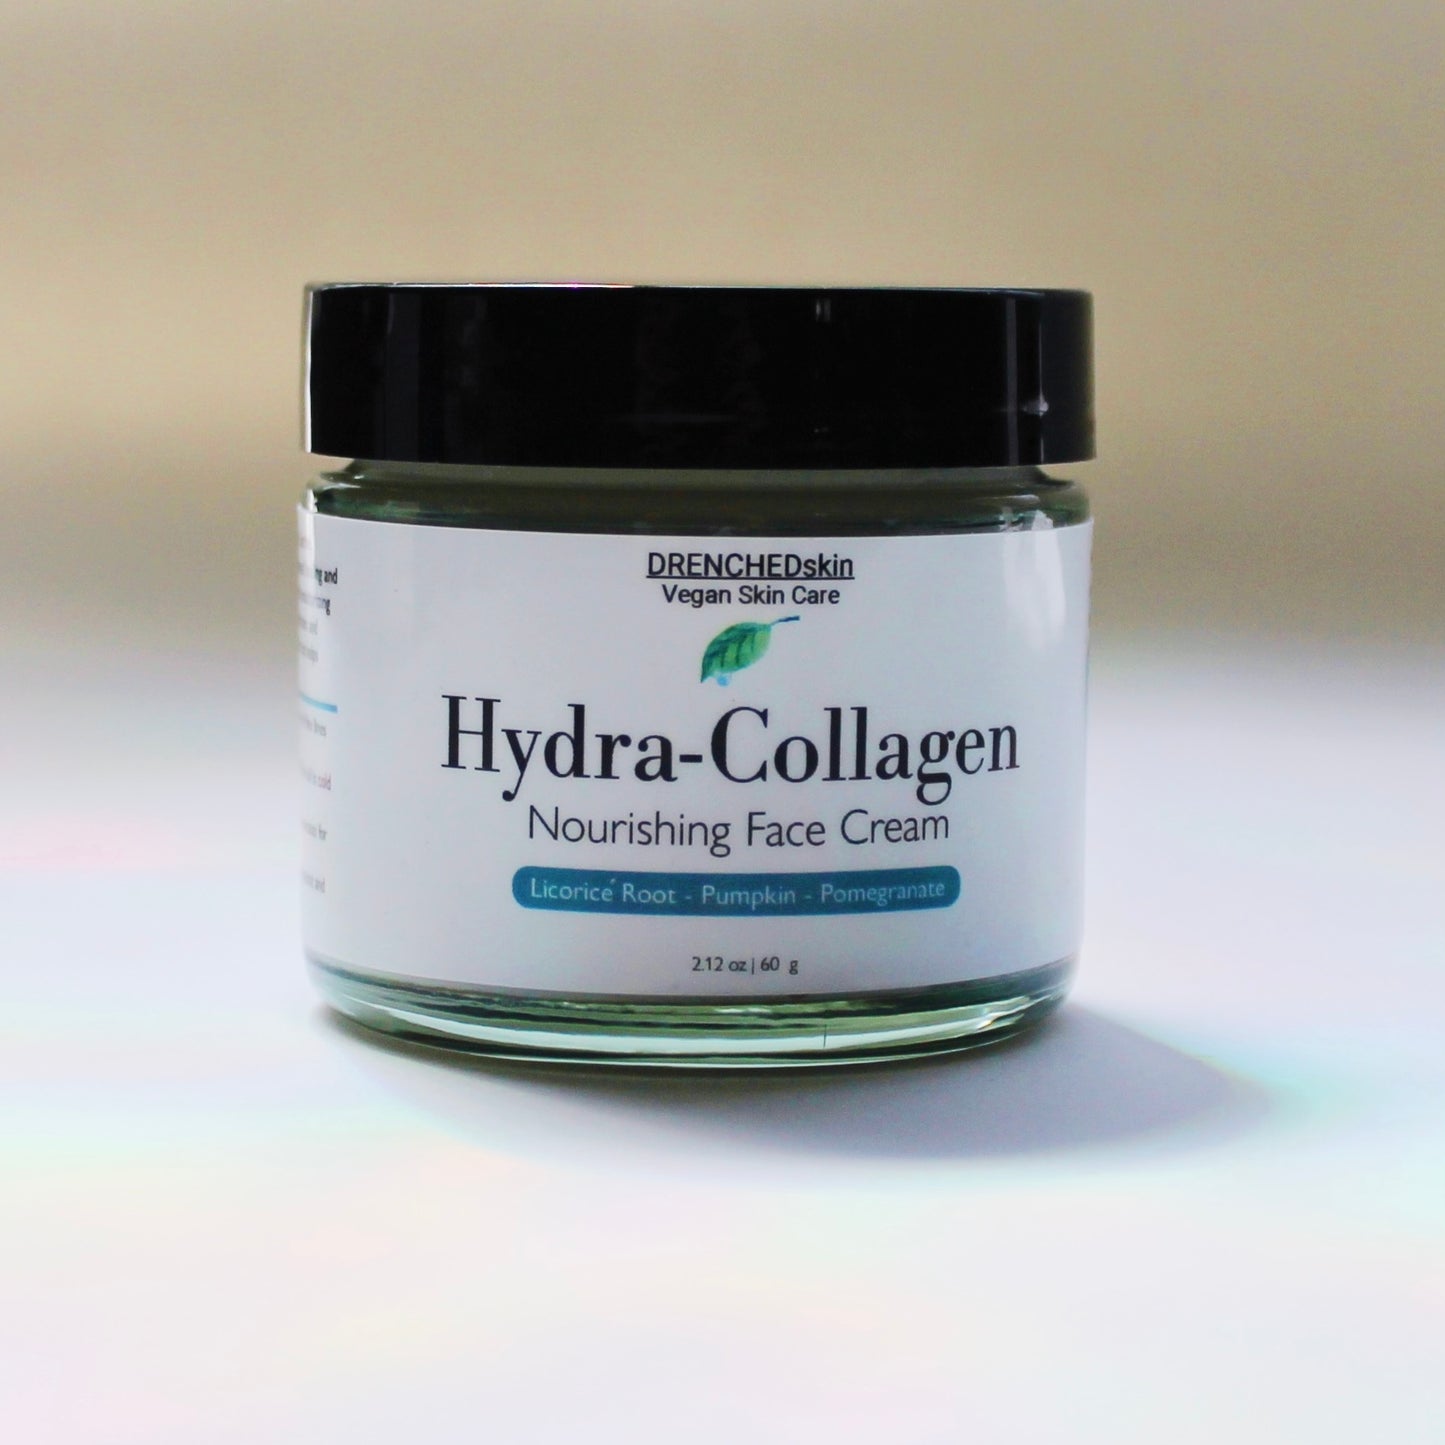 HYDRA-COLLAGEN Nourishing Face Cream - DRENCHEDskin®